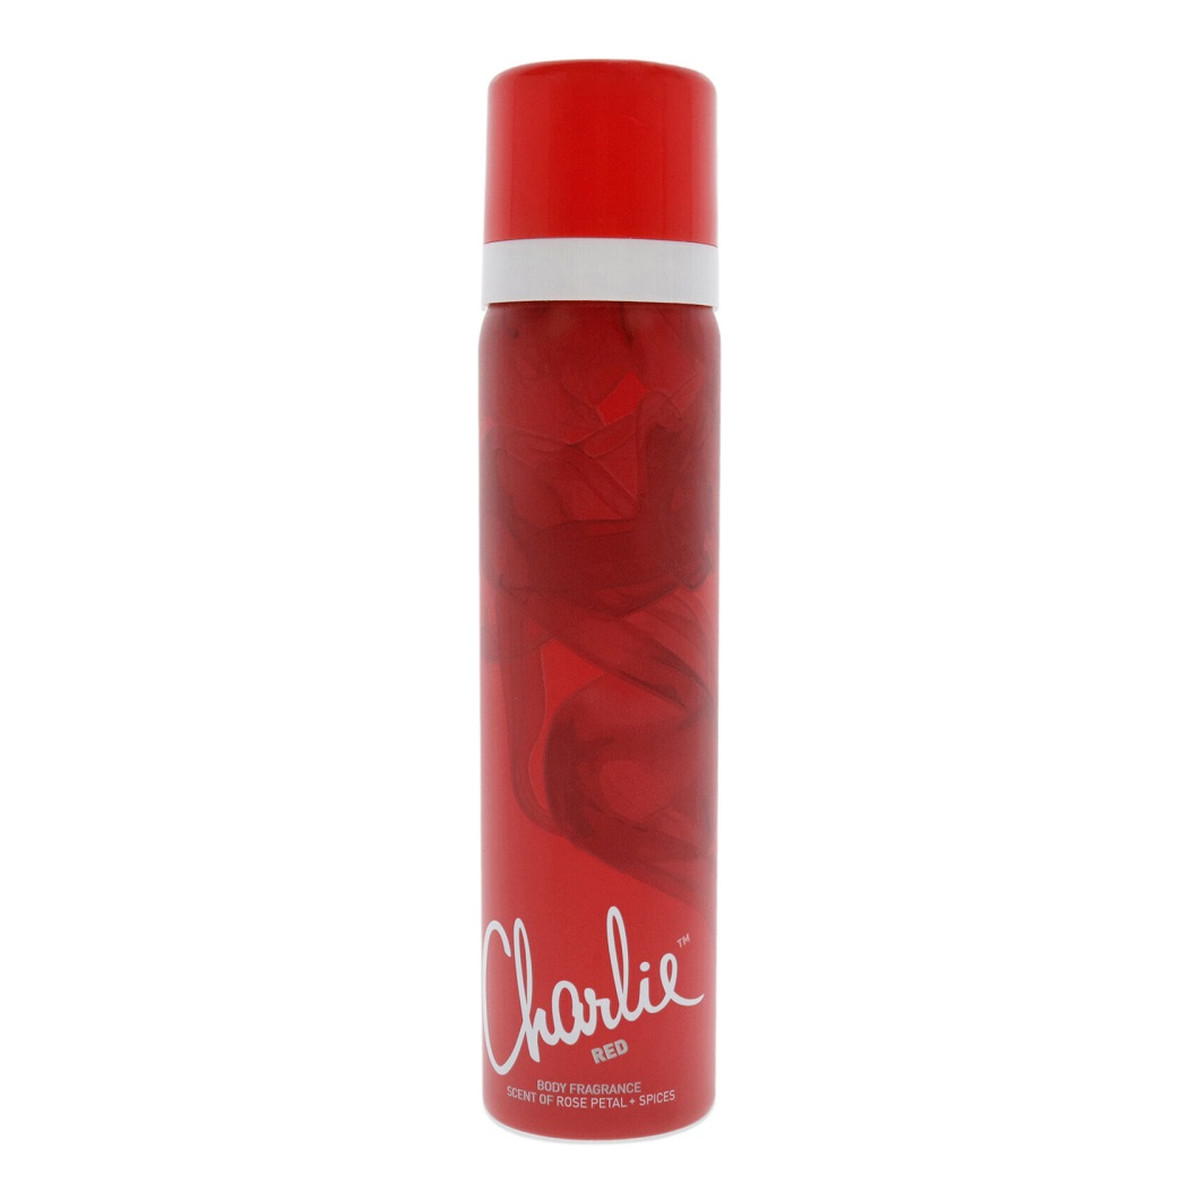 Revlon Charlie Red Dezodorant spray 75ml